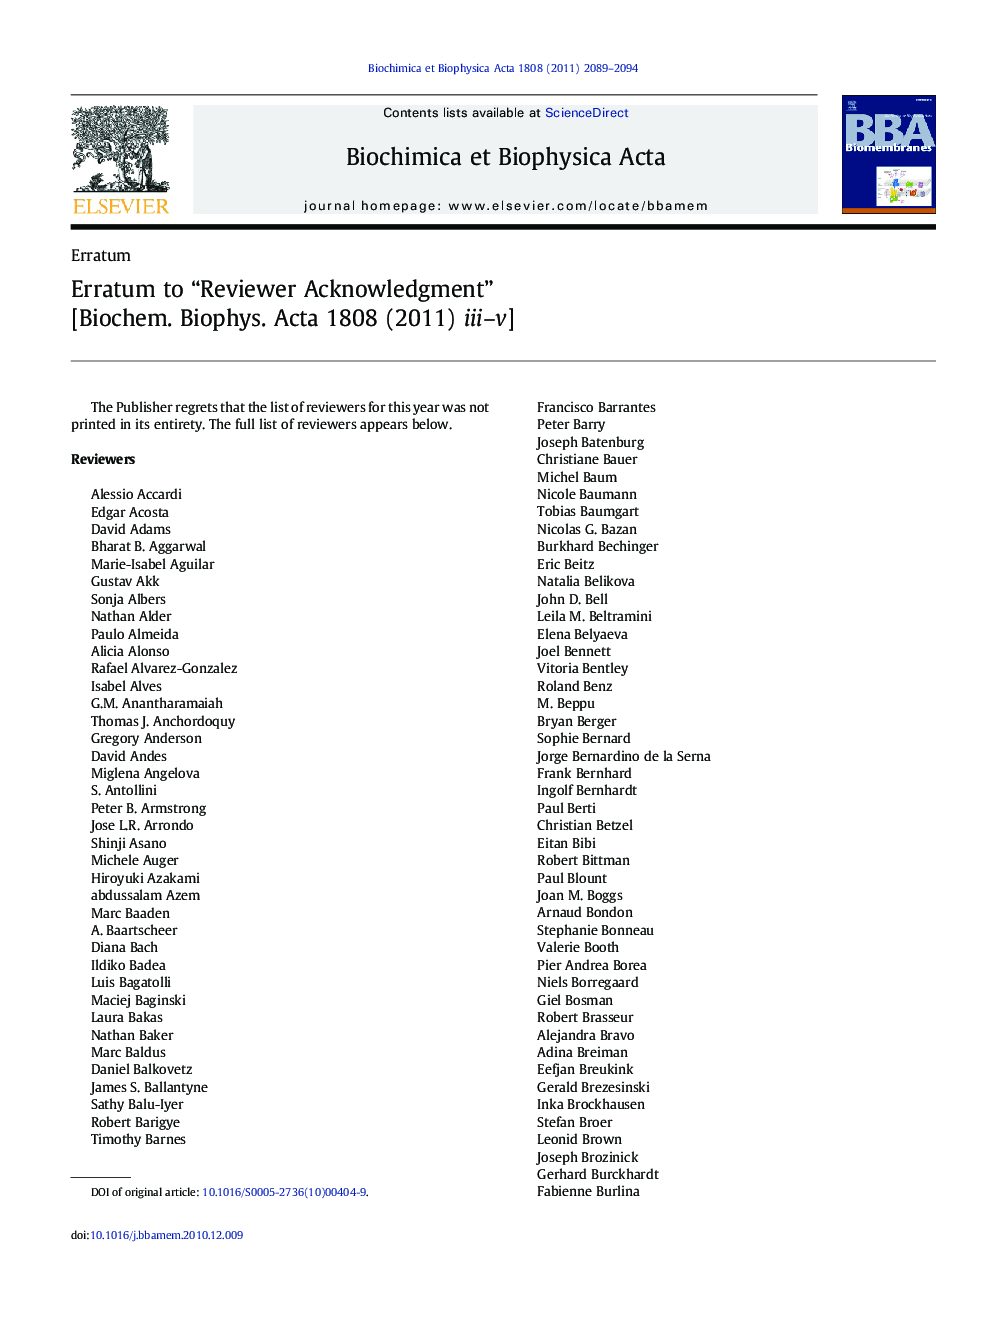 Erratum to “Reviewer Acknowledgment” [Biochem. Biophys. Acta 1808 (2011) iii-v]